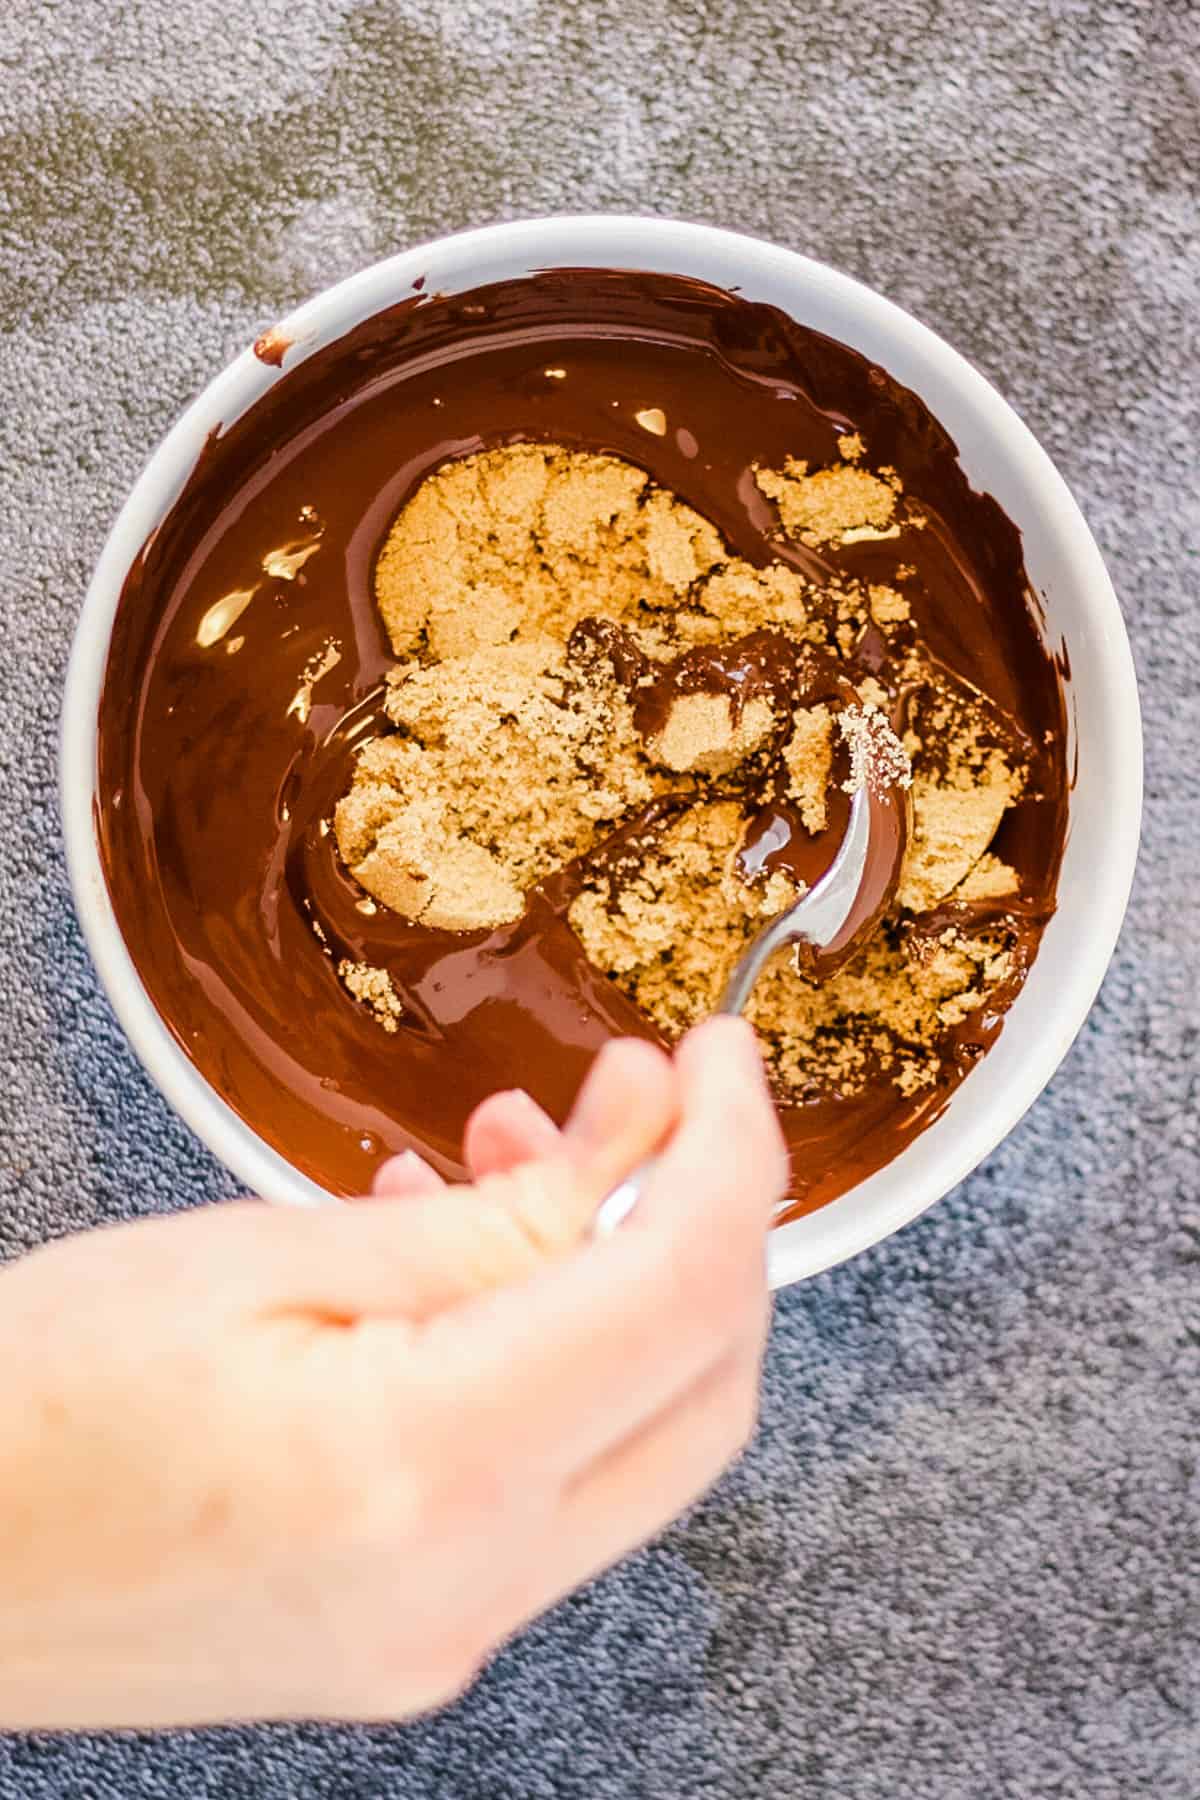 Stirring brown sugar into the chocolate.